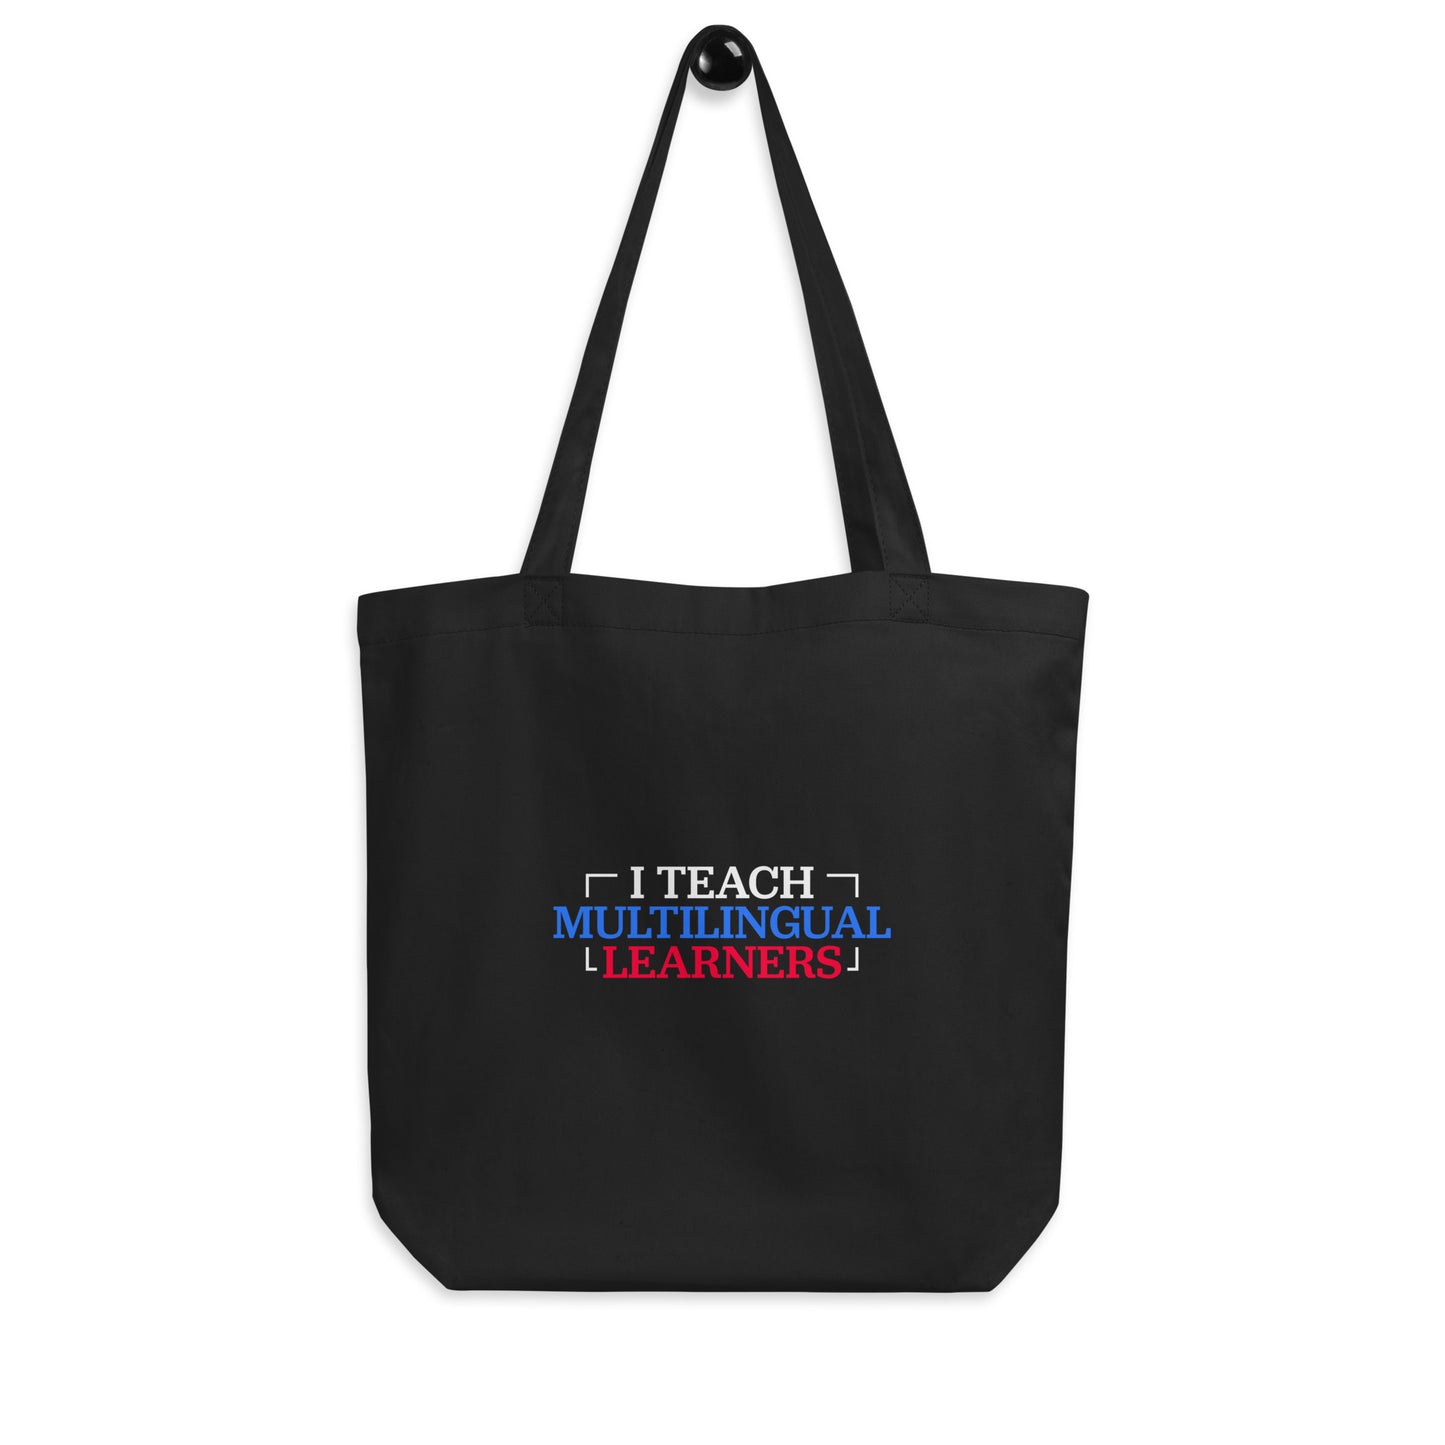 Teach Multilingual Learner Eco Tote Bag.